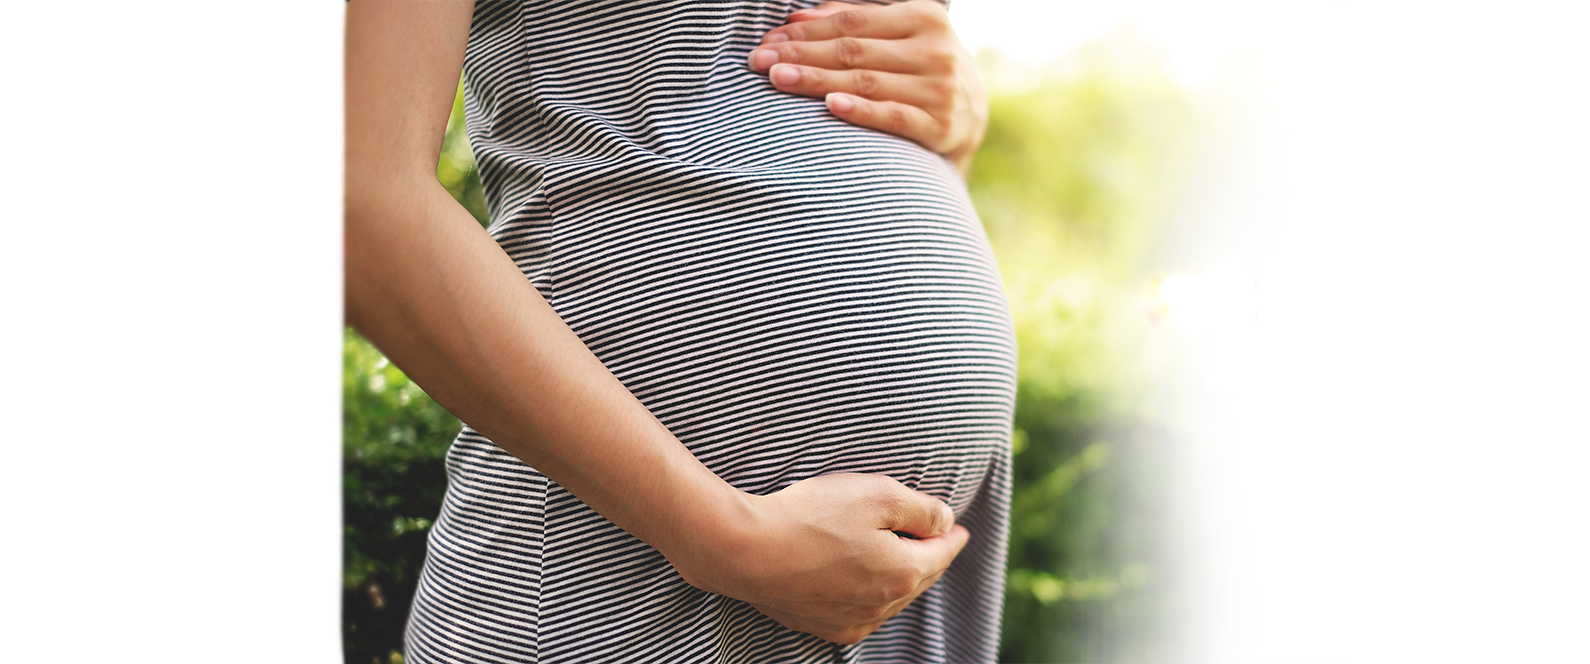 Pregnancy, the newborn baby, breastfeeding and COVID-19